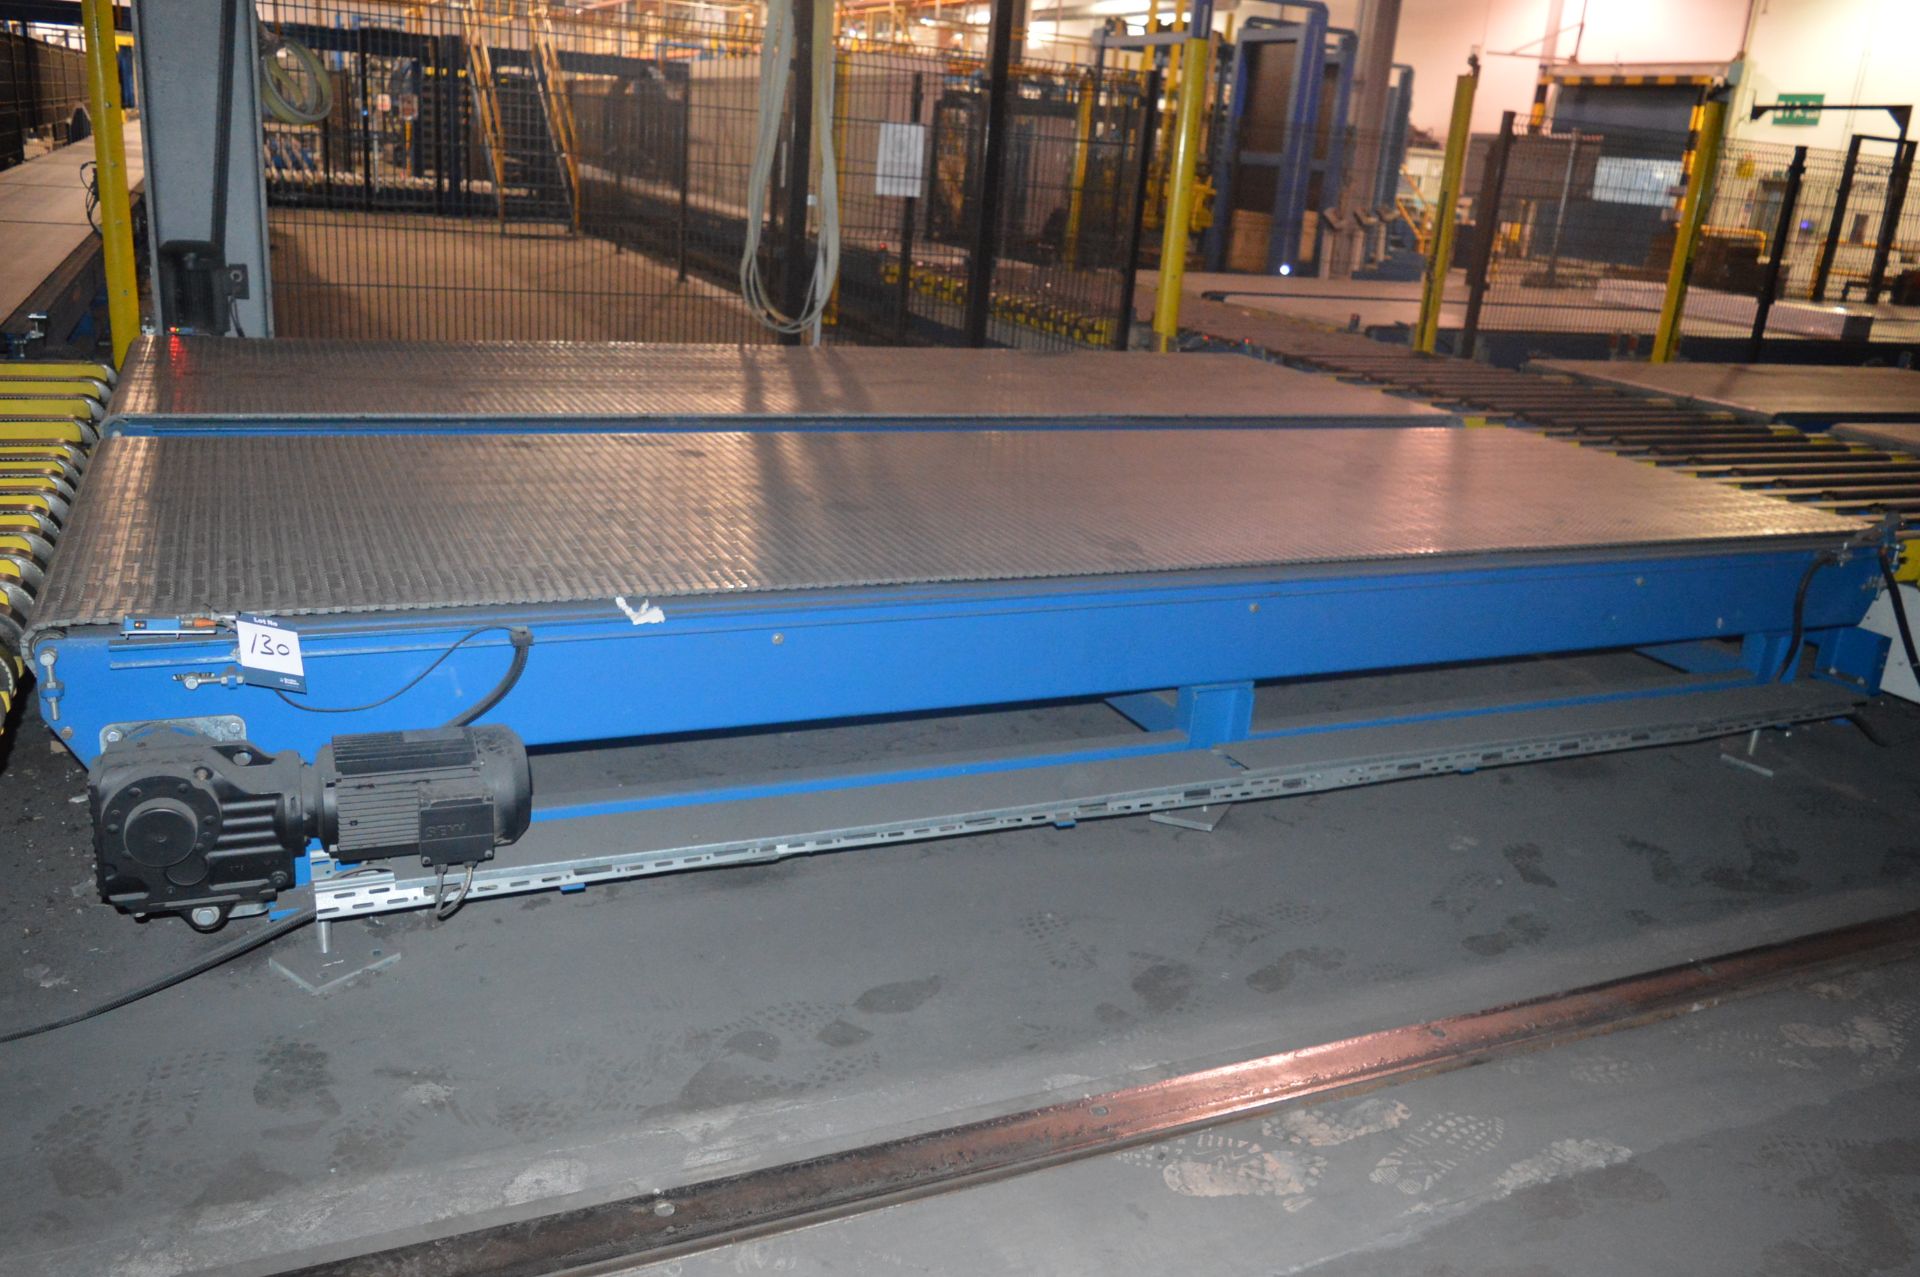 2 x Kraft, motorised modular plastic belt conveyors (2006) 4.4m (l) x 1.4m (w) (Due to the